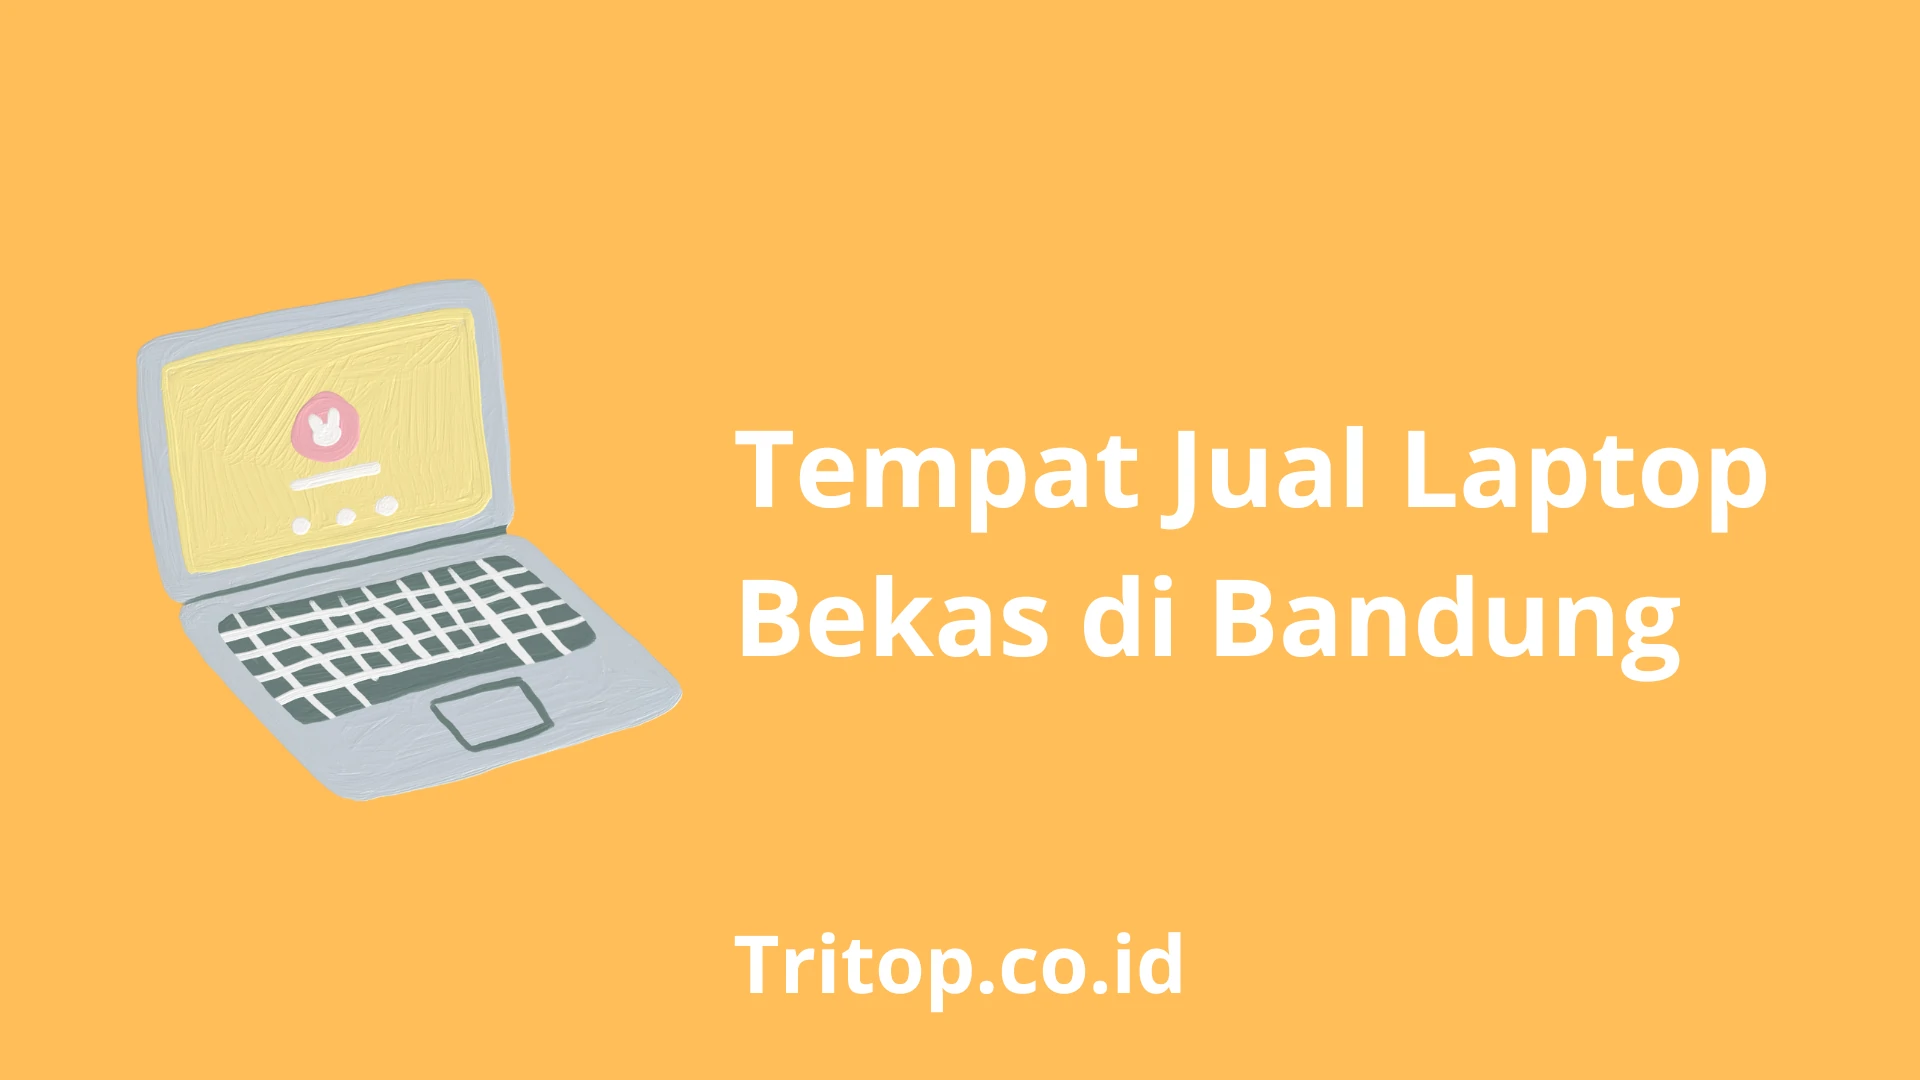 Tempat Jual Laptop Bekas di Bandung tritop.co.id